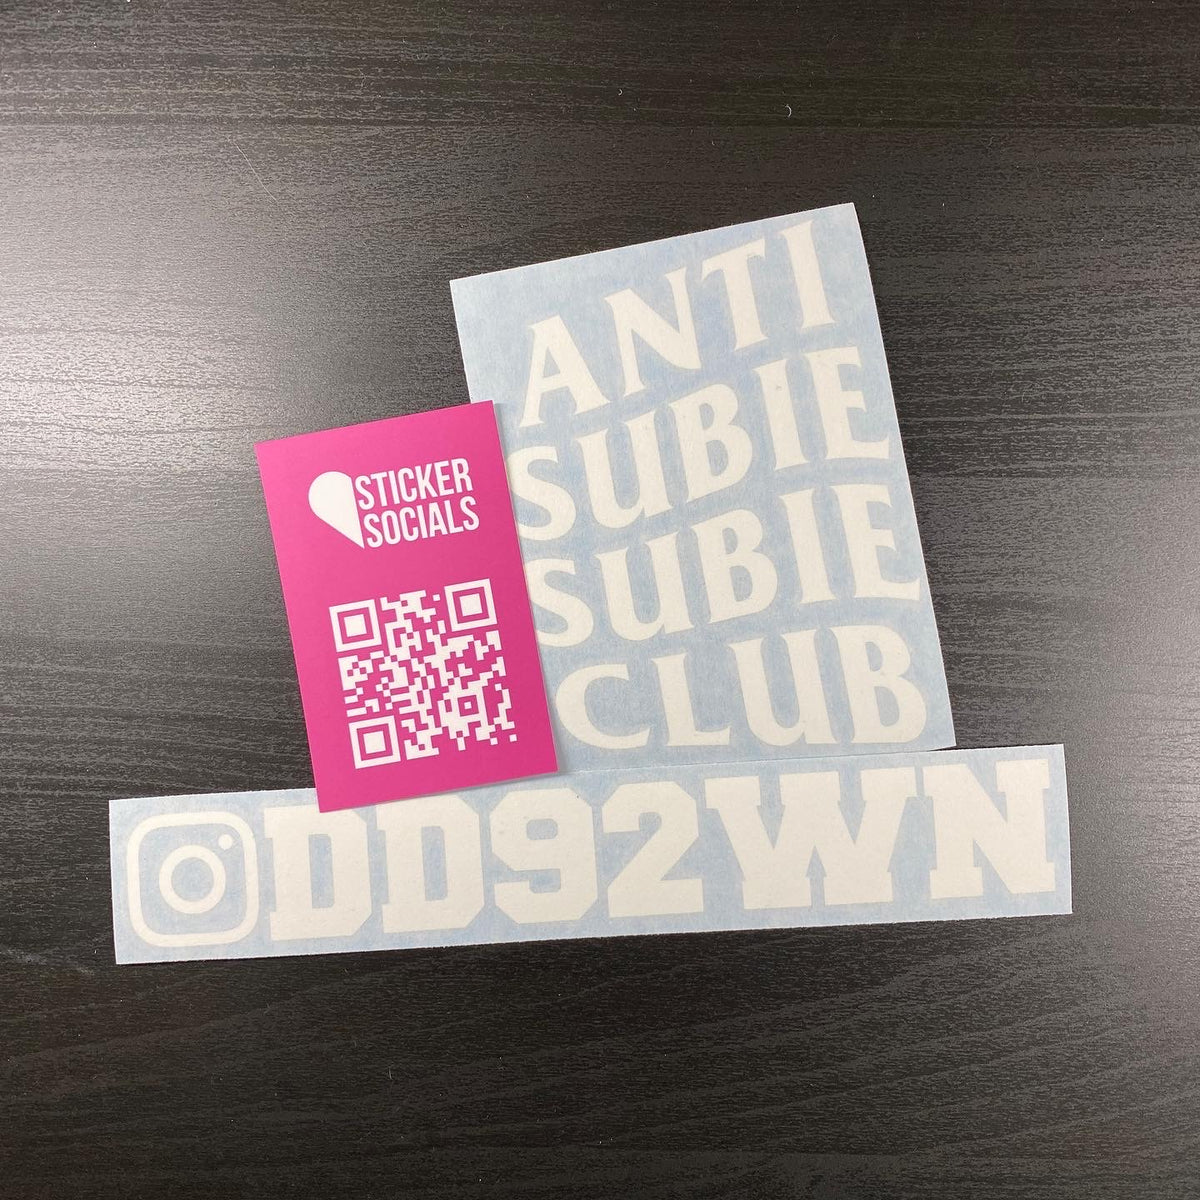 Anti Subie Subie Club Decal Sticker